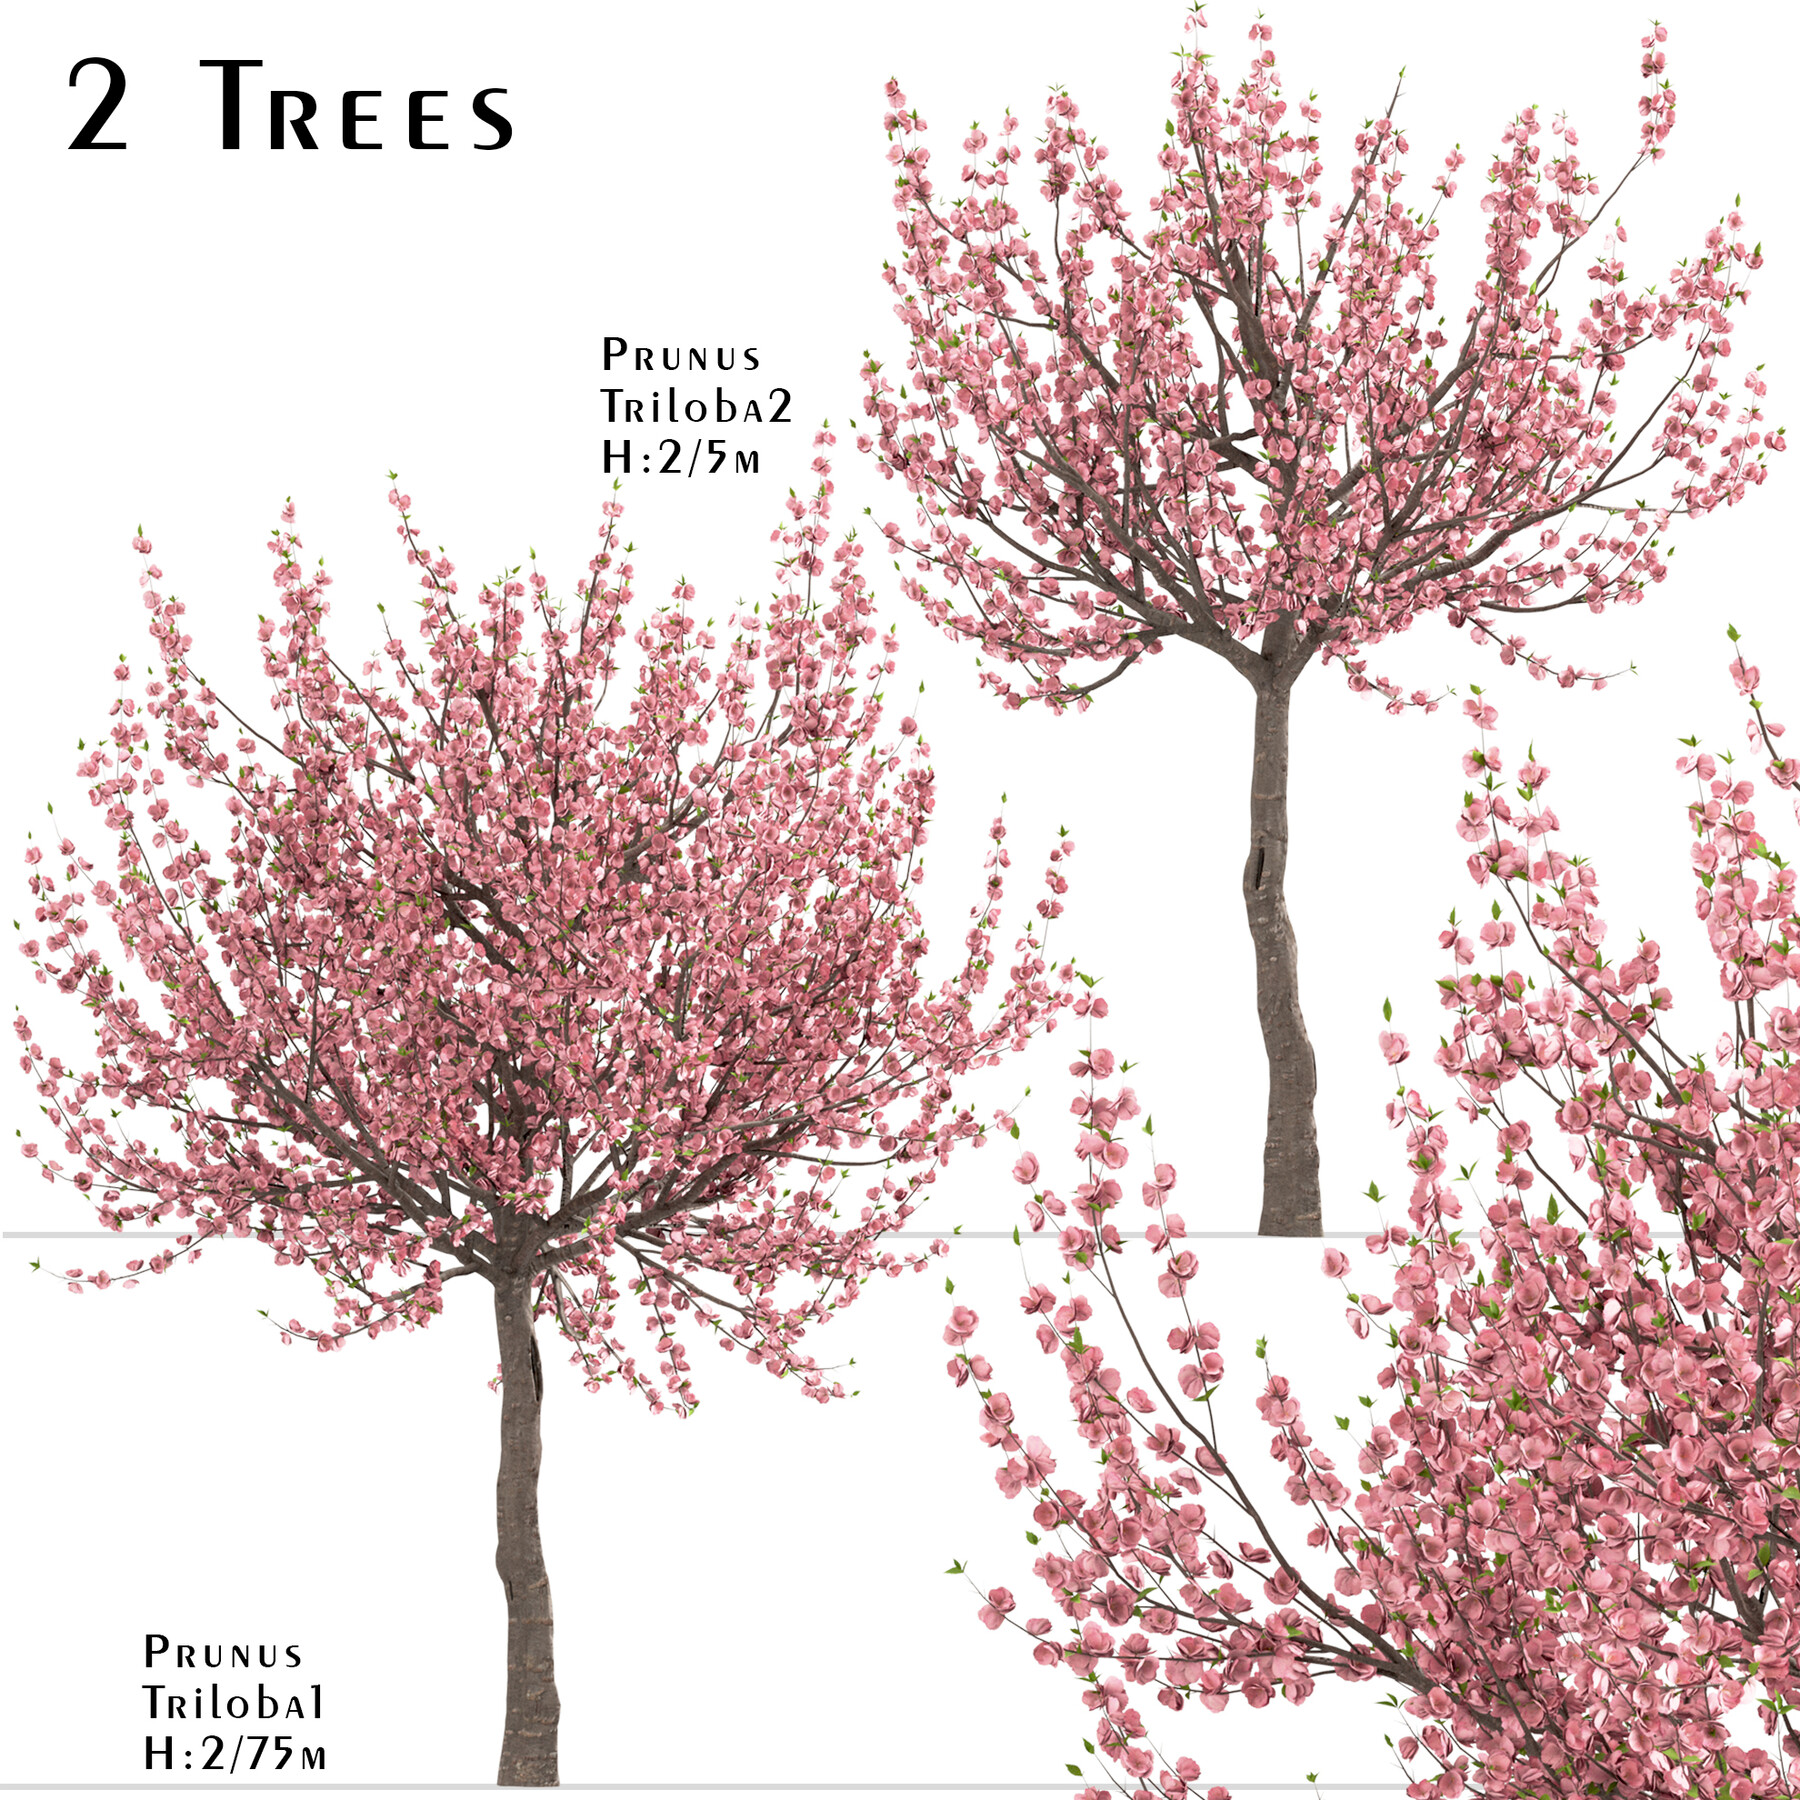 set of prunus triloba trees (flowering almond) (2 trees)